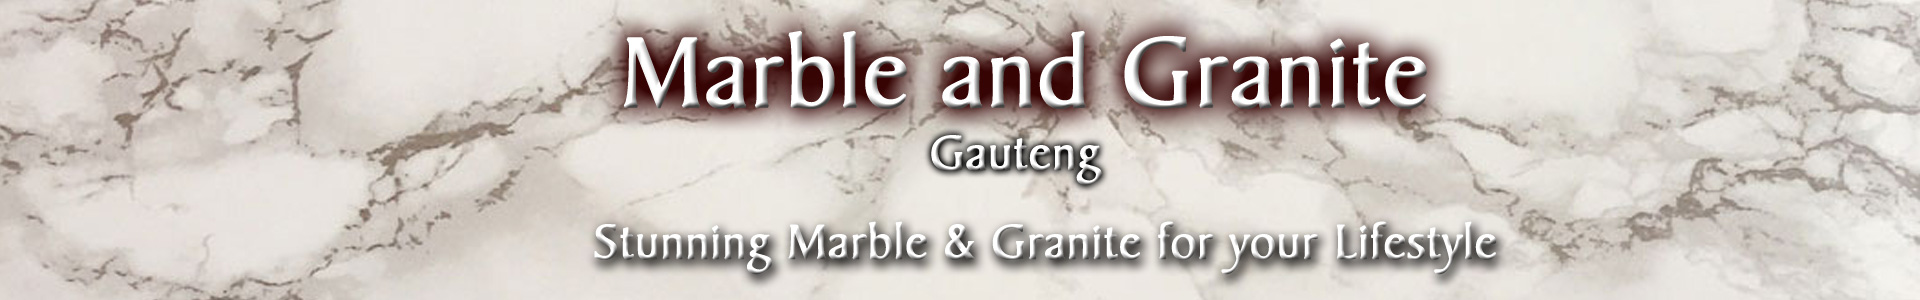 History of Granite